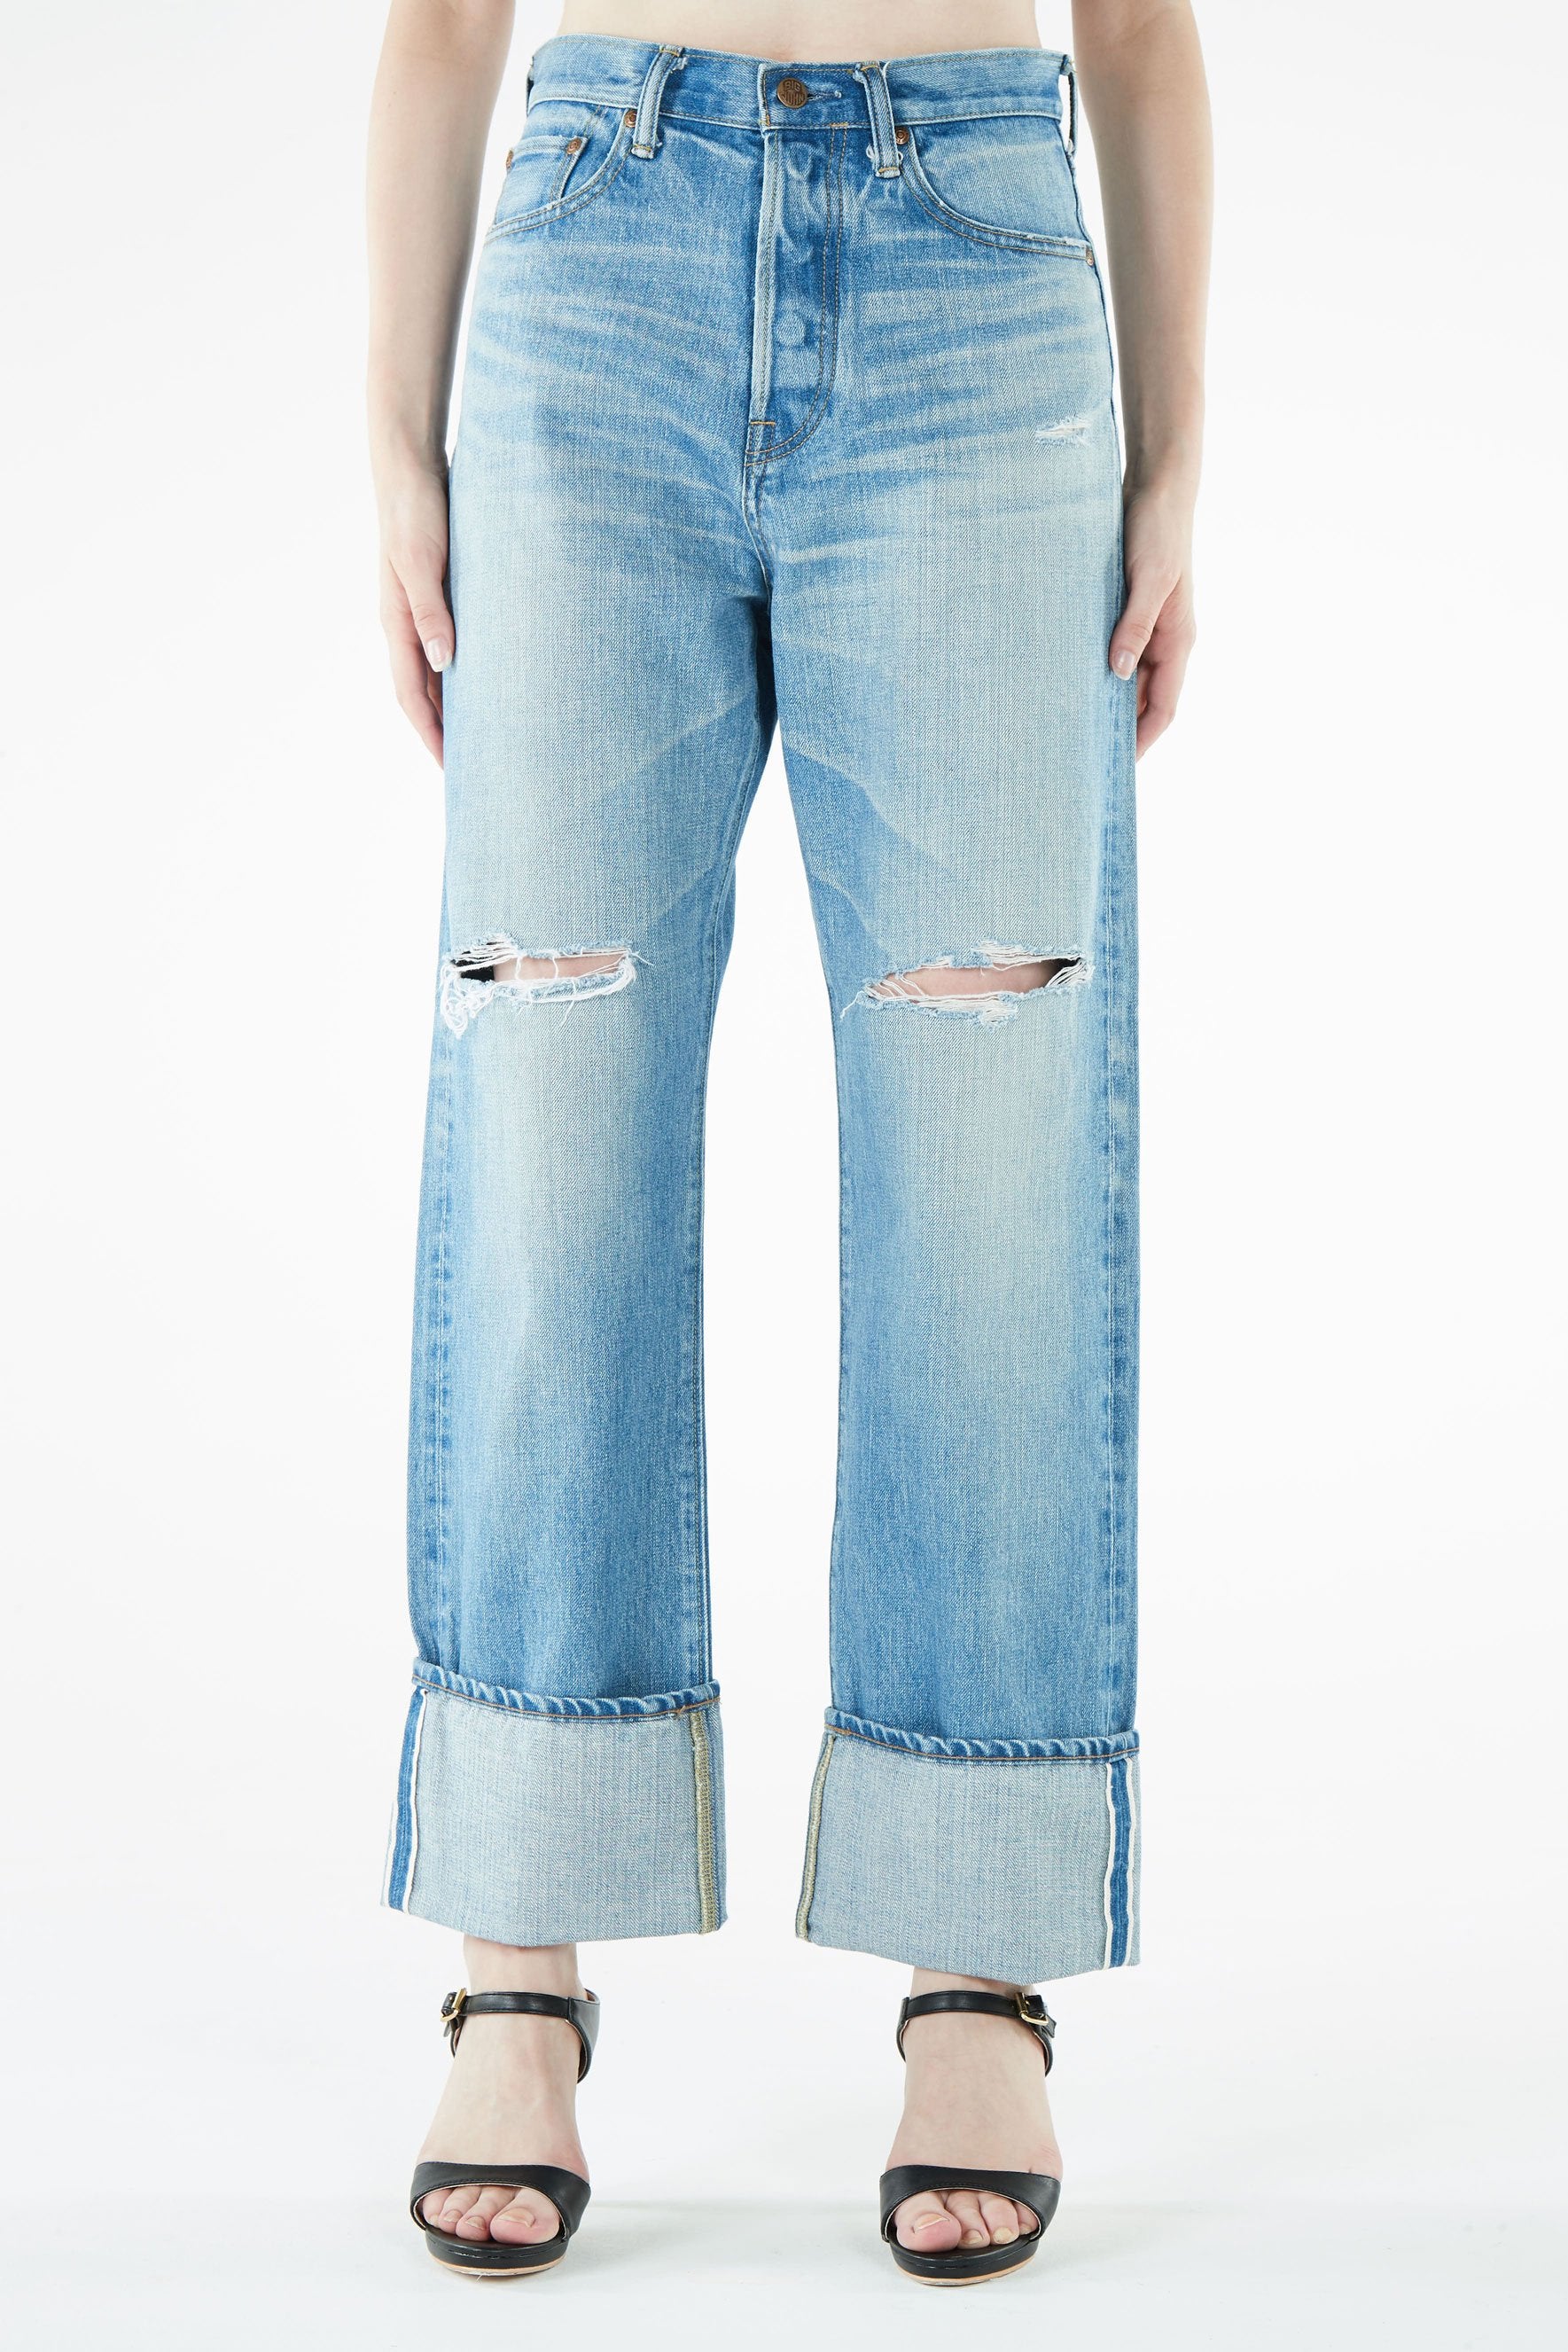 Brappers, Premium Jeans, Kojima Japan, Made in Japan, Quality Denim -  Brappers